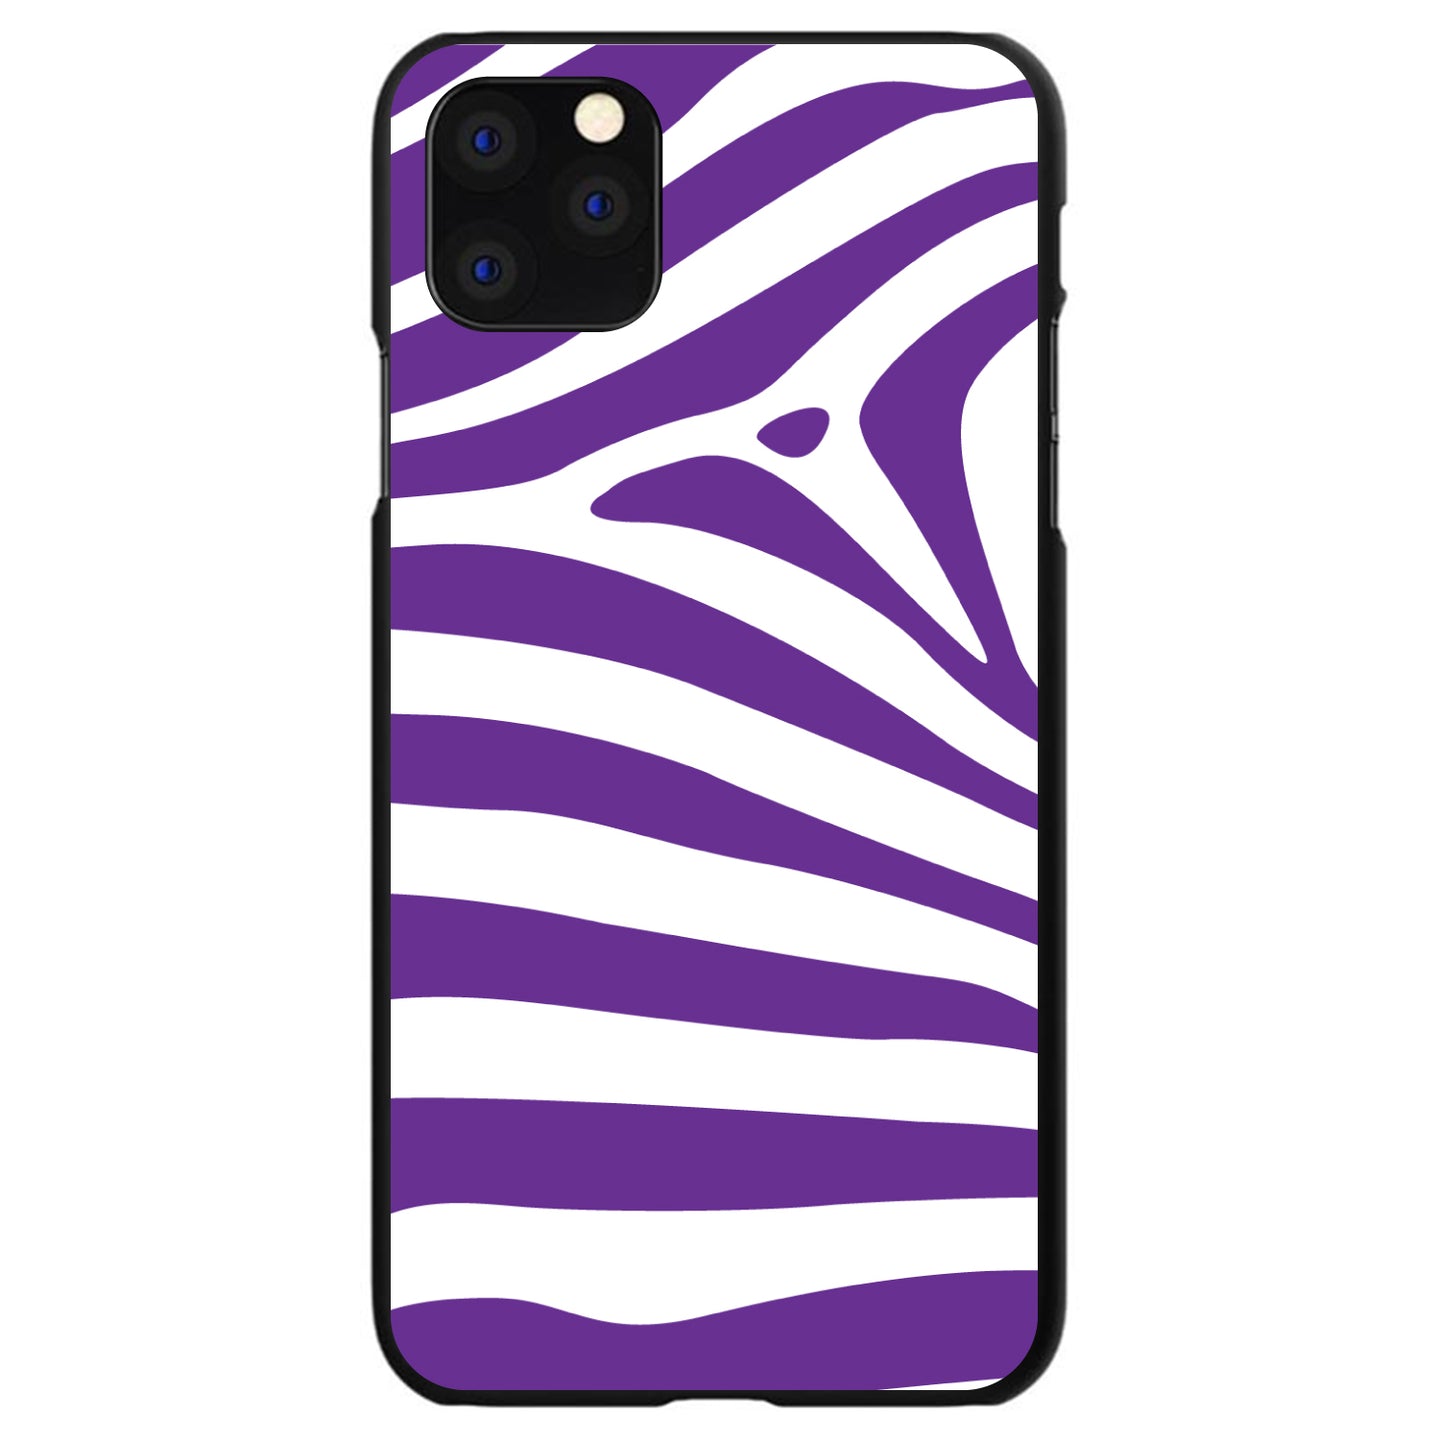 DistinctInk® Hard Plastic Snap-On Case for Apple iPhone or Samsung Galaxy - Purple & White Zebra Skin Stripes